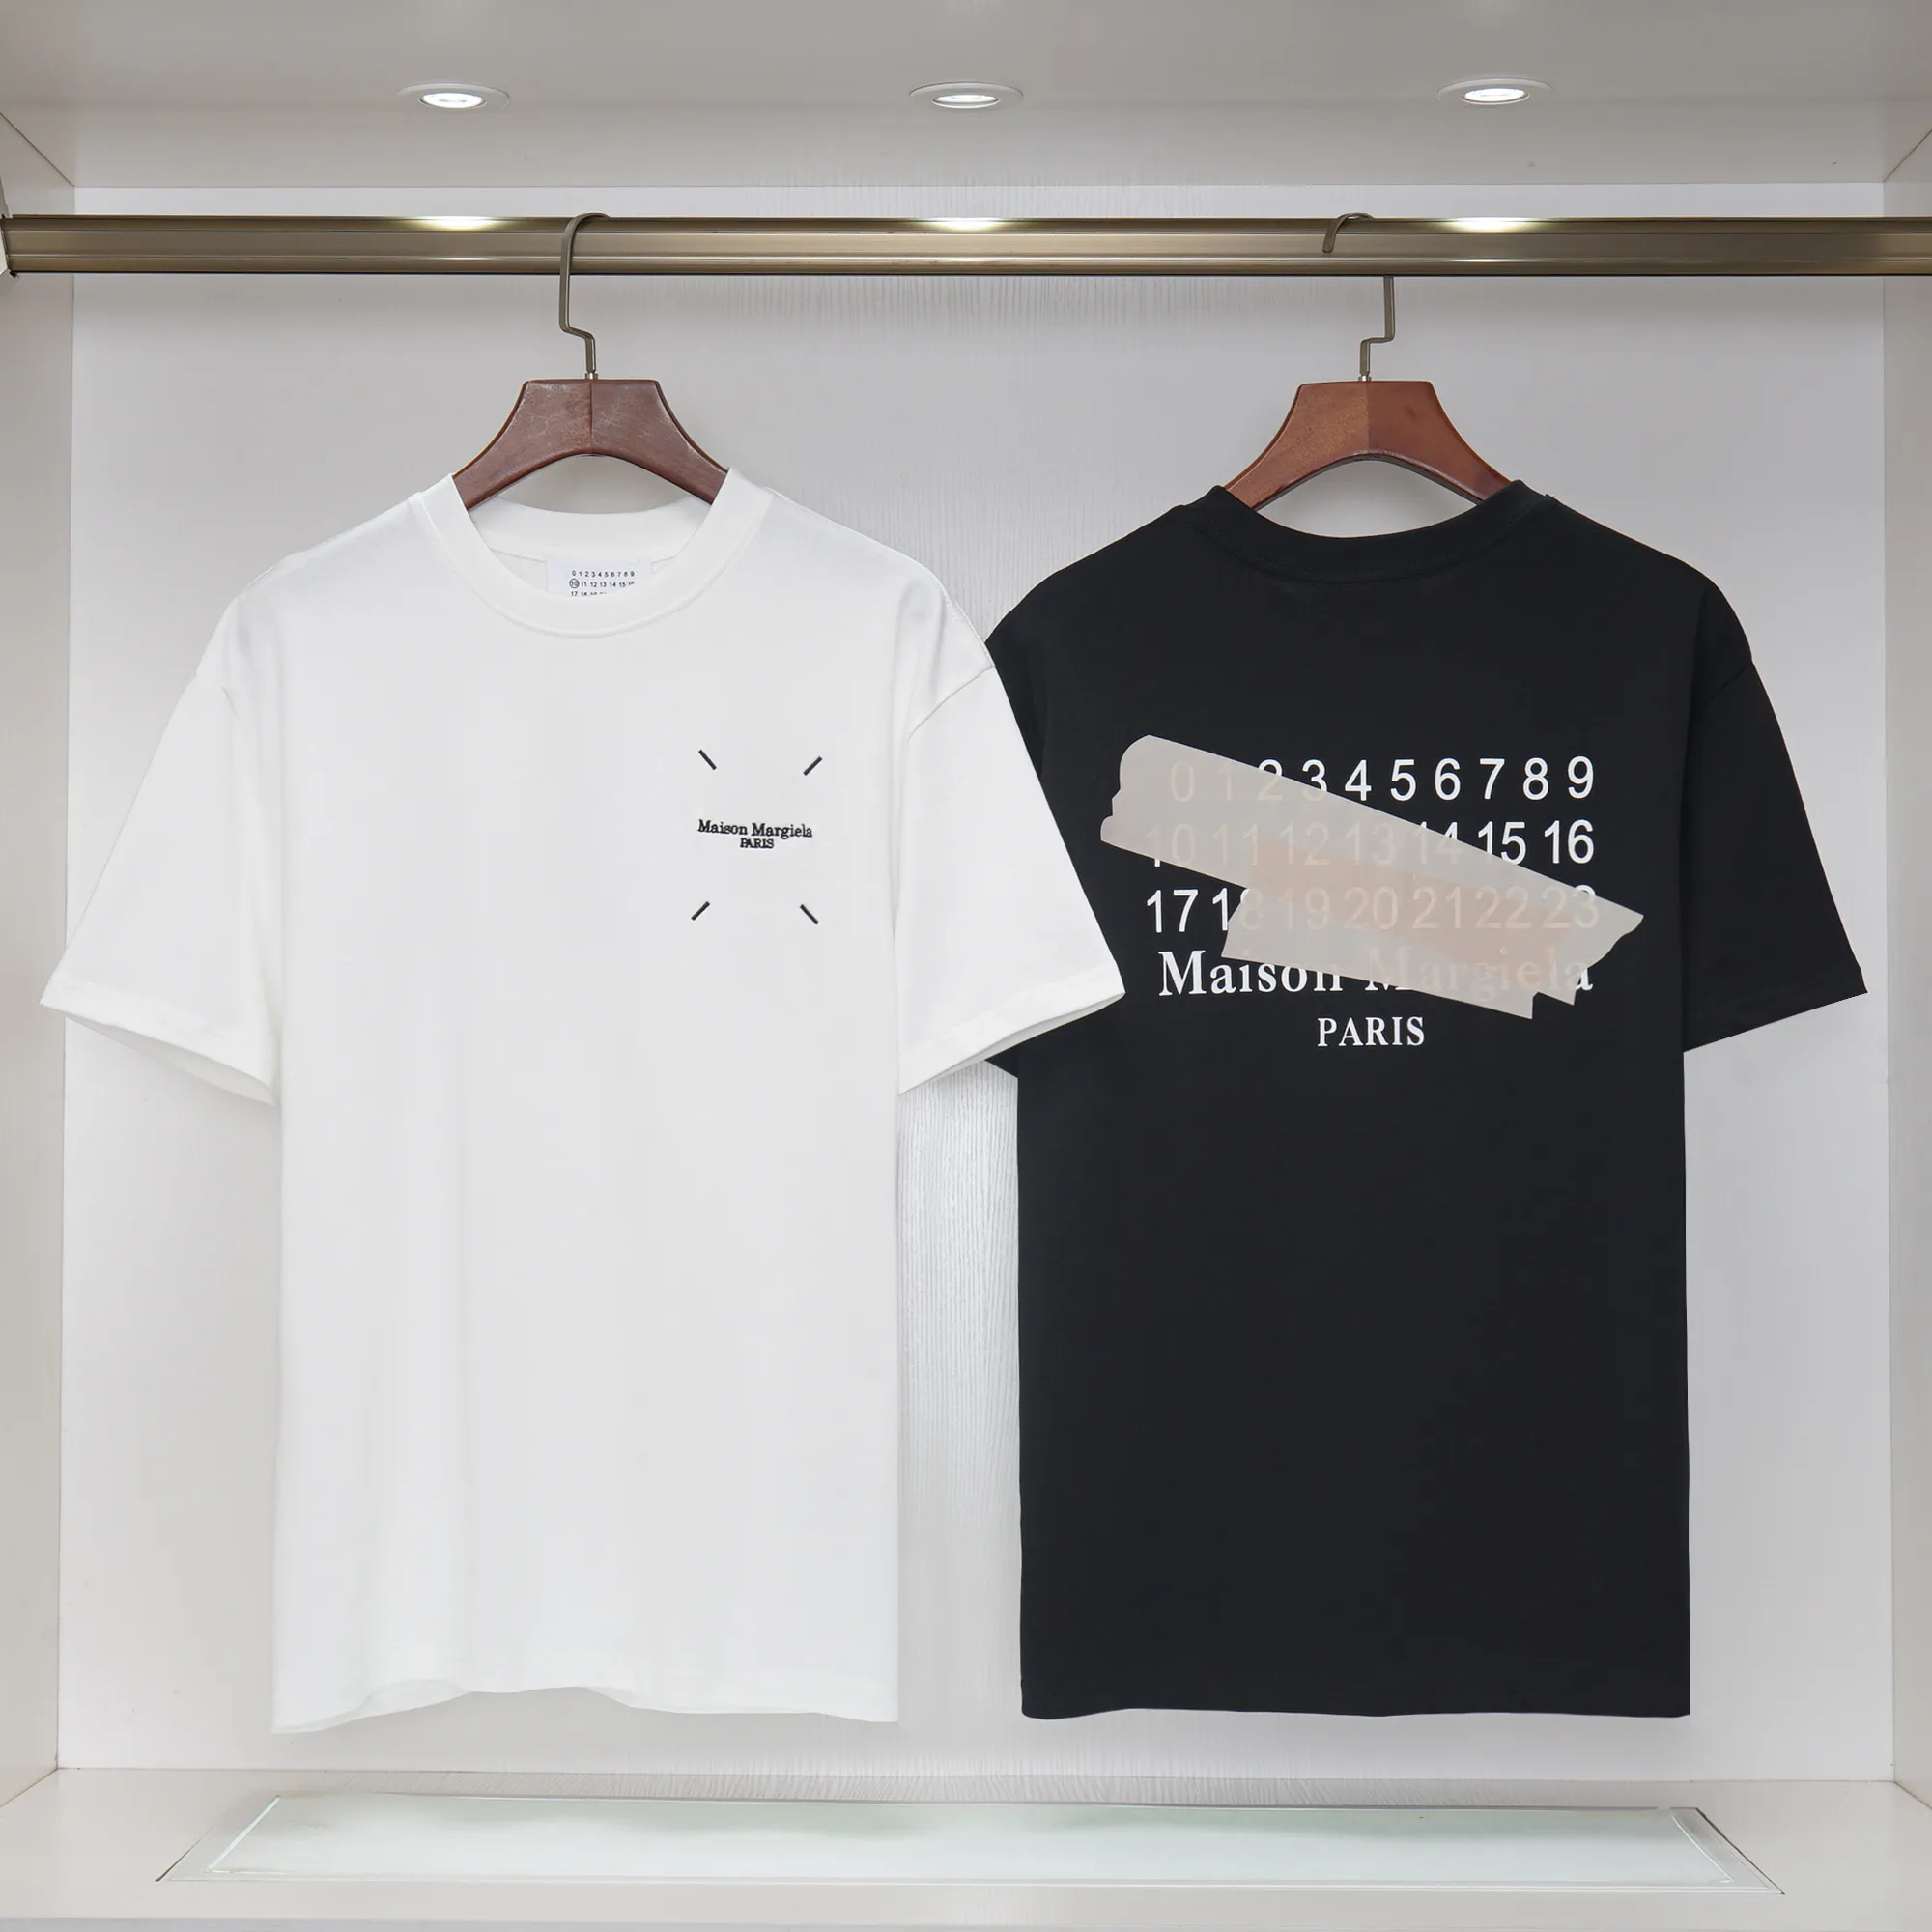 Summer Mens cotton t-shirts Margiela studios shirt Designer brand custom graffiti Arabic numerals printing LOGO paris Leisure sports big size mens short sleeve tops